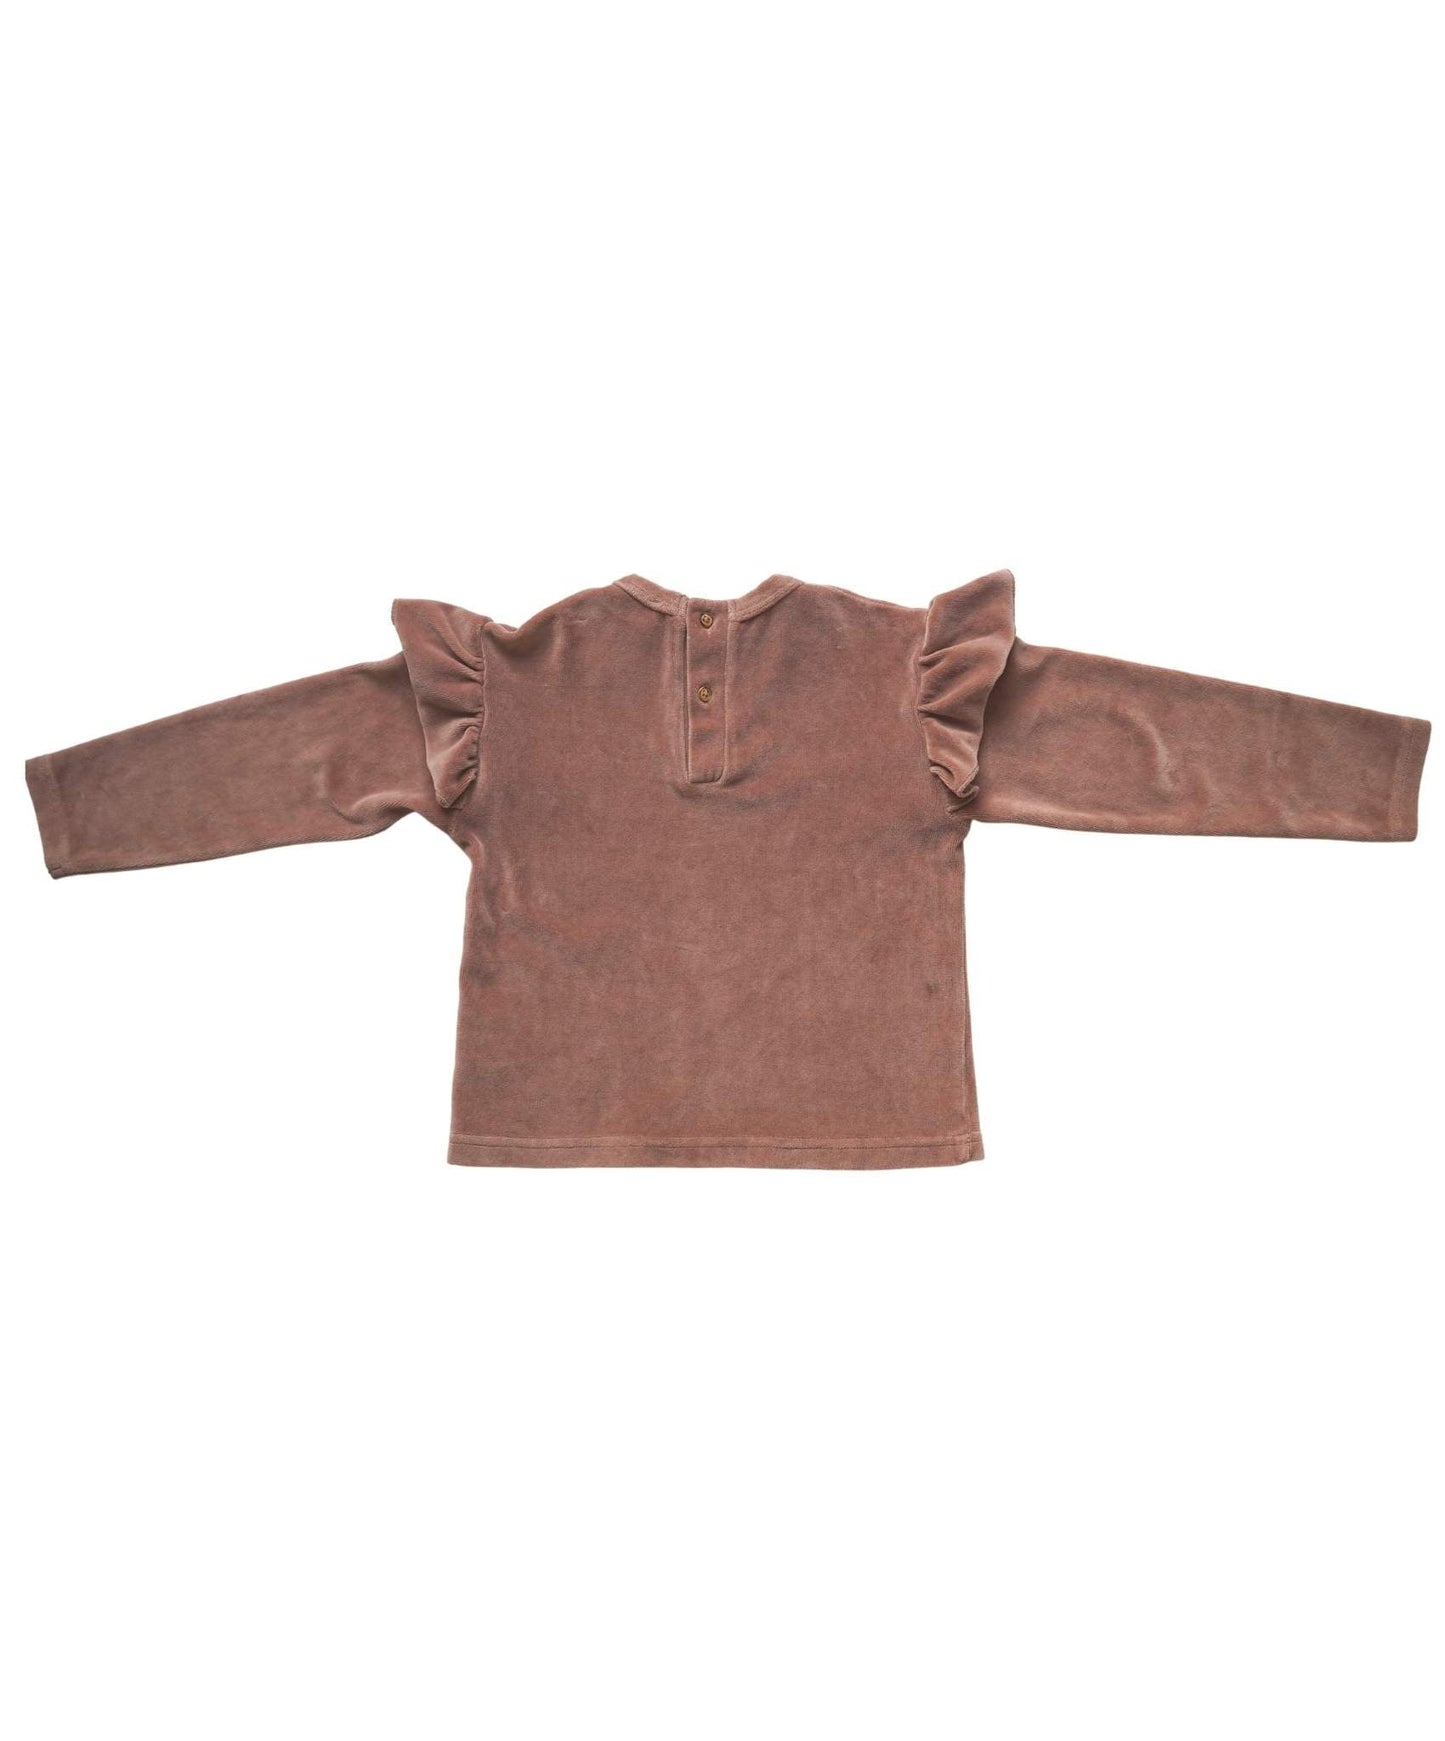 Stocksale: The Frill Velvet sweatshirt - rose wood